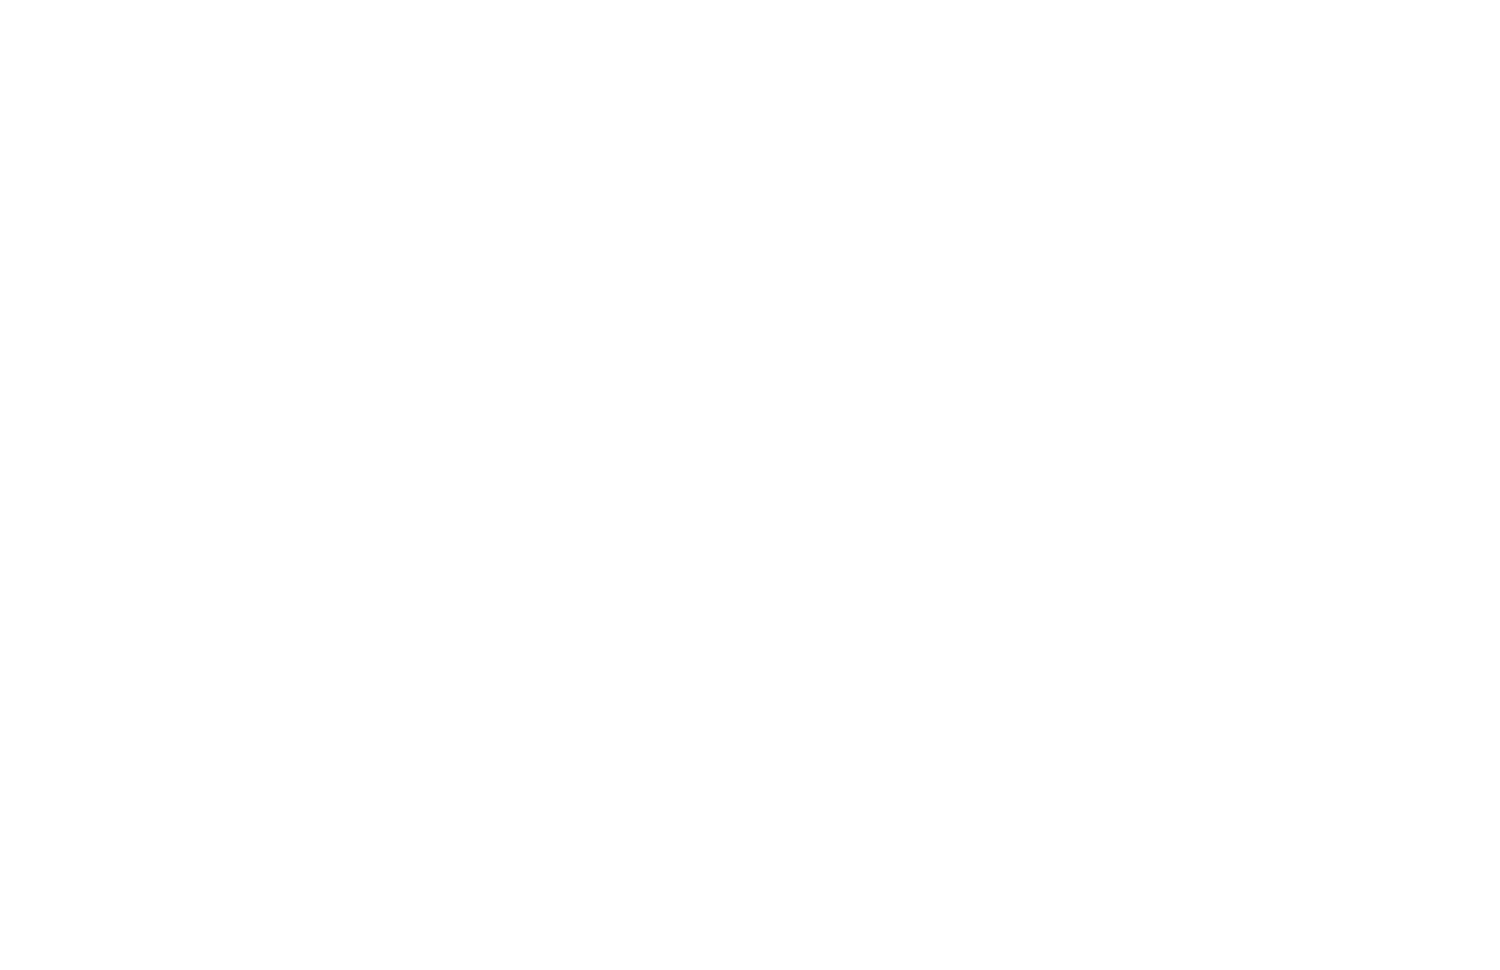 REBL UNION BOXING CLUB